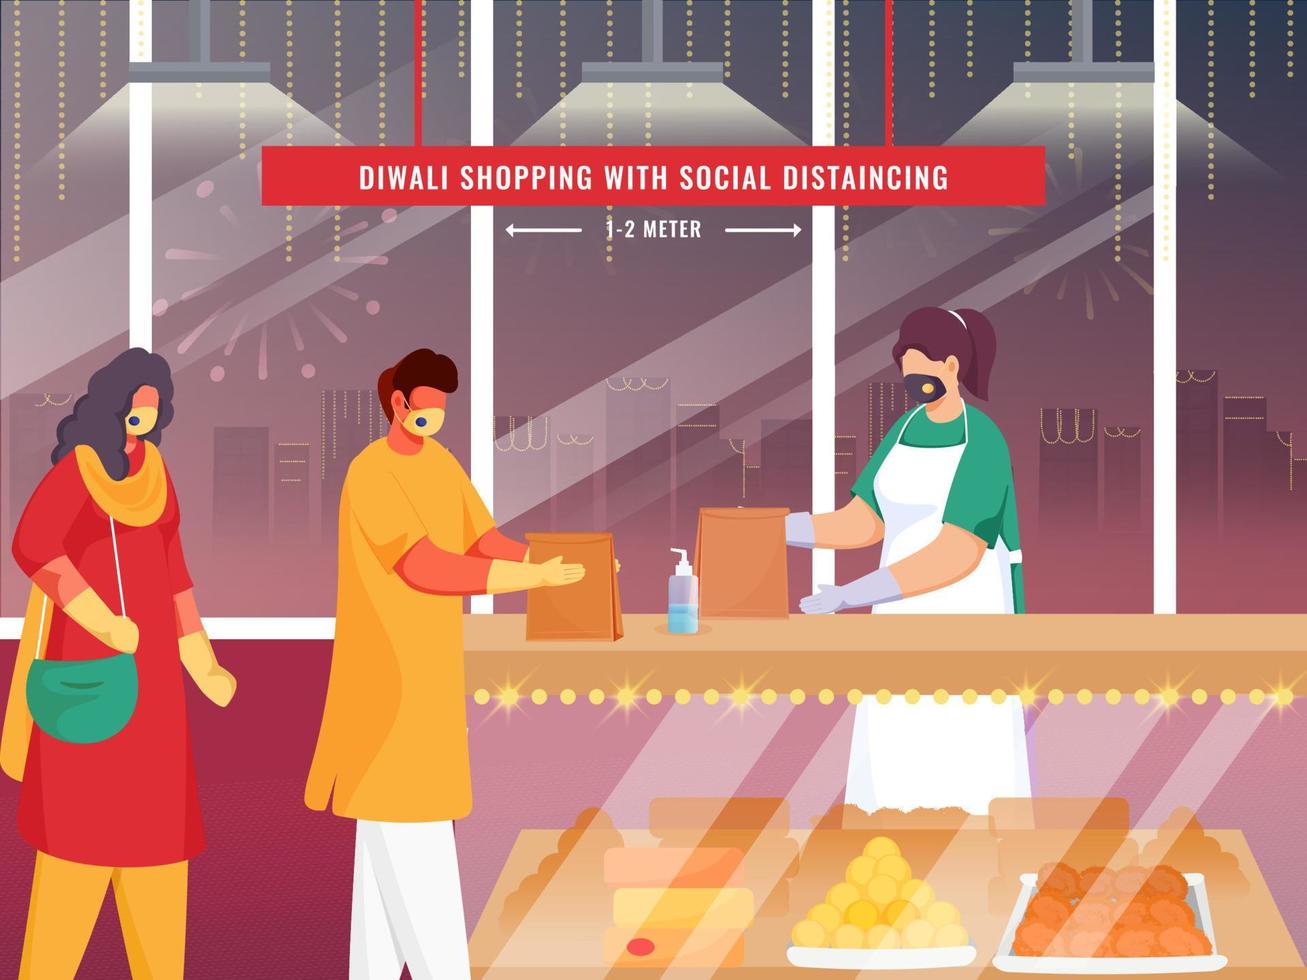 indiano consumidores levando Cuidado do segurança medidas. conceito para diwali compras Porque do covid19 pandemia. vetor